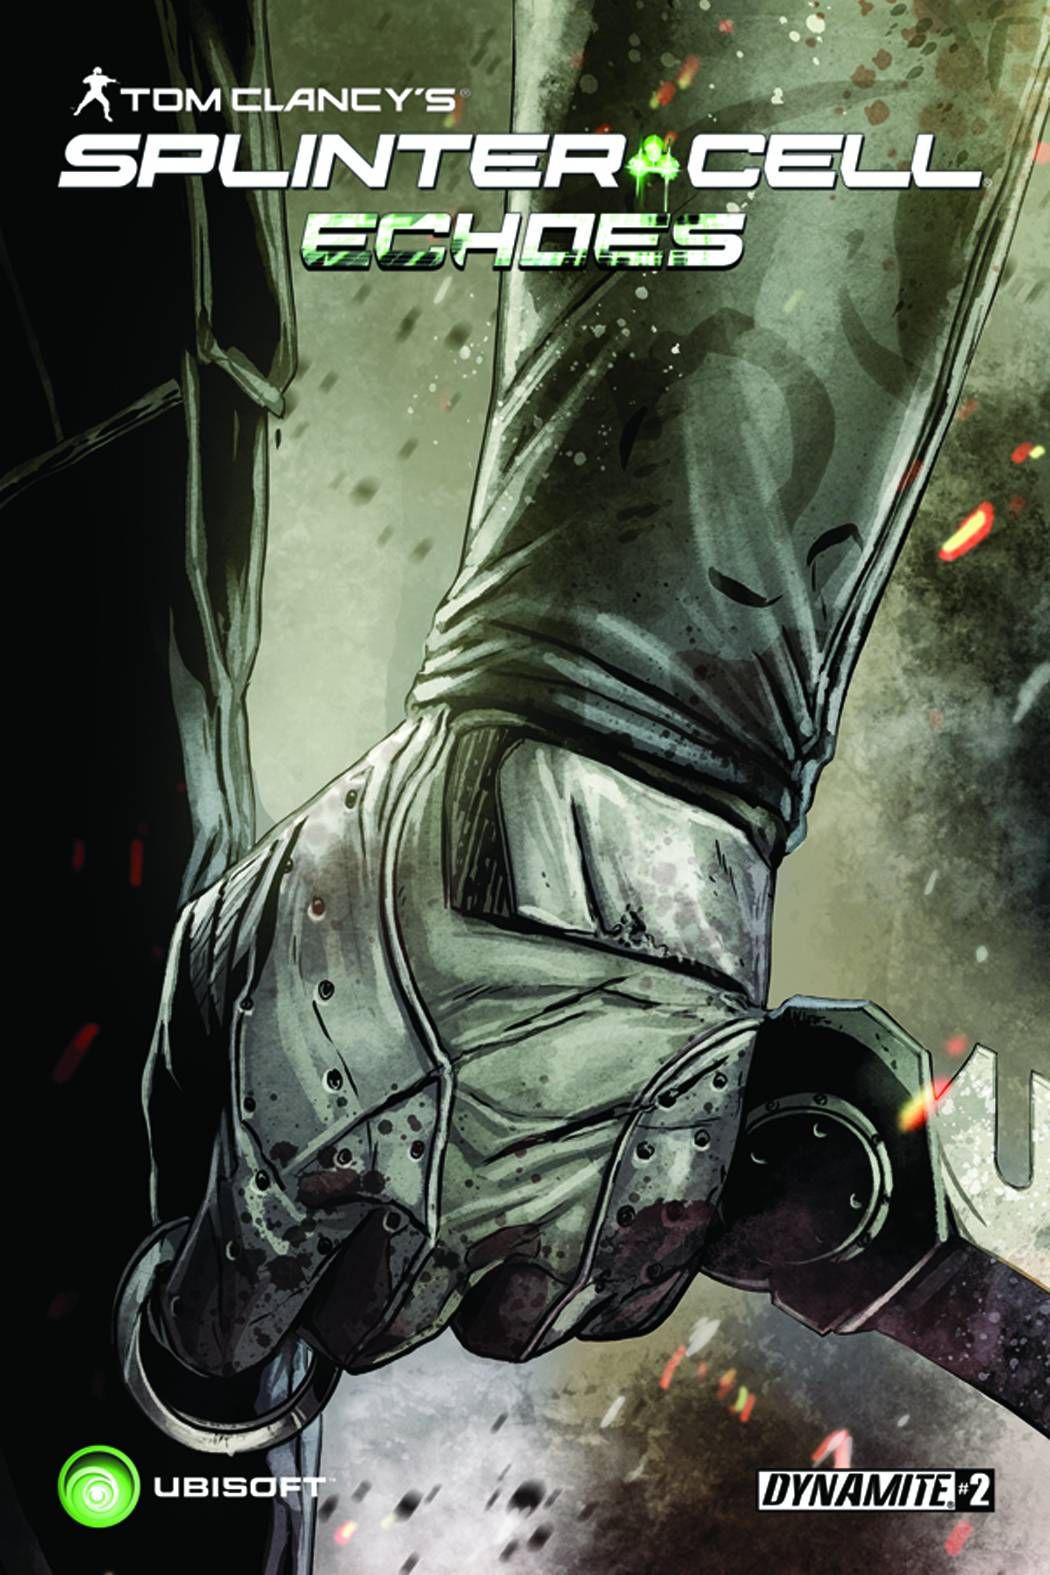 Tom Clancy's Splinter Cell: Echoes #2 Comic